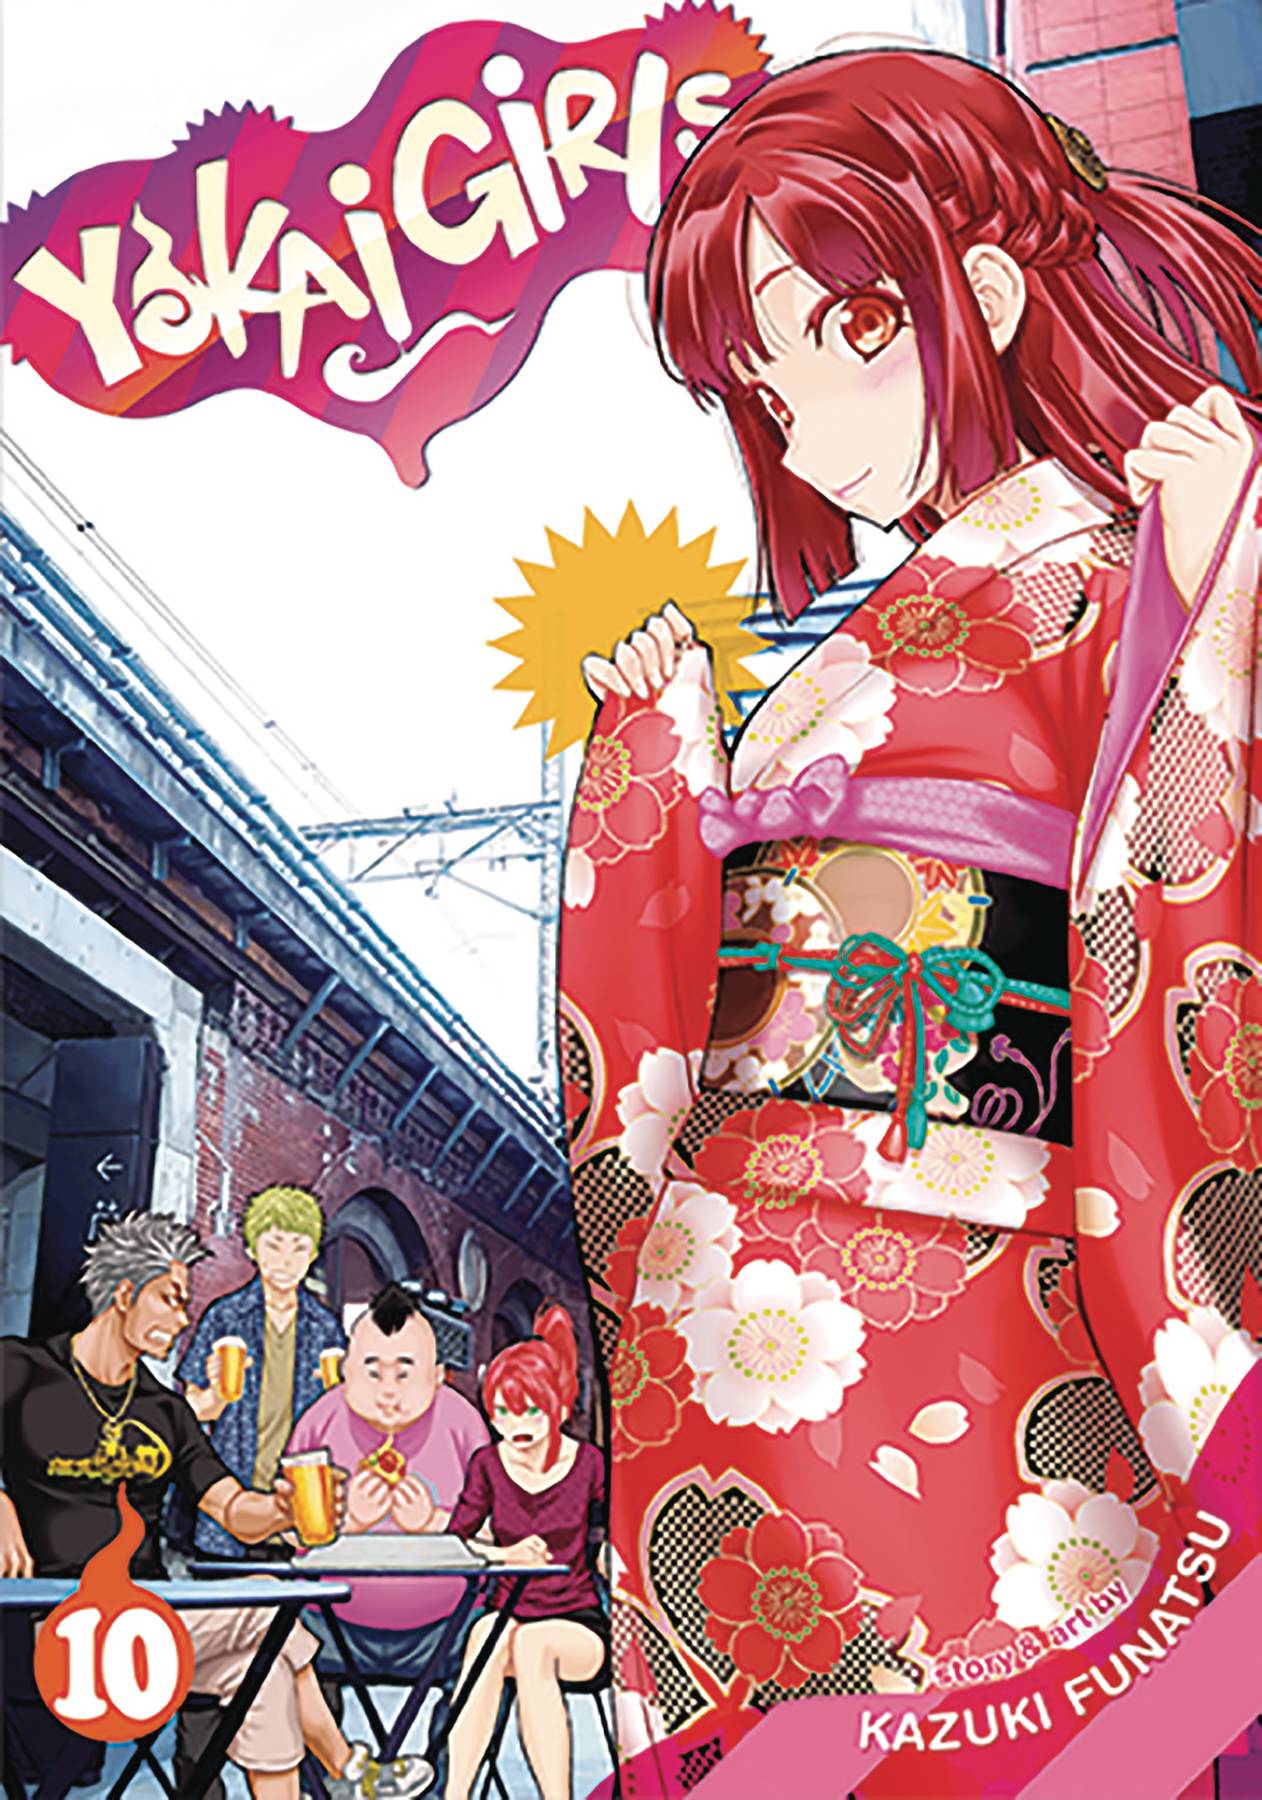 YOKAI GIRLS GN VOL 10 (JAN202136) (MR) | Game Master's Emporium (The New GME)